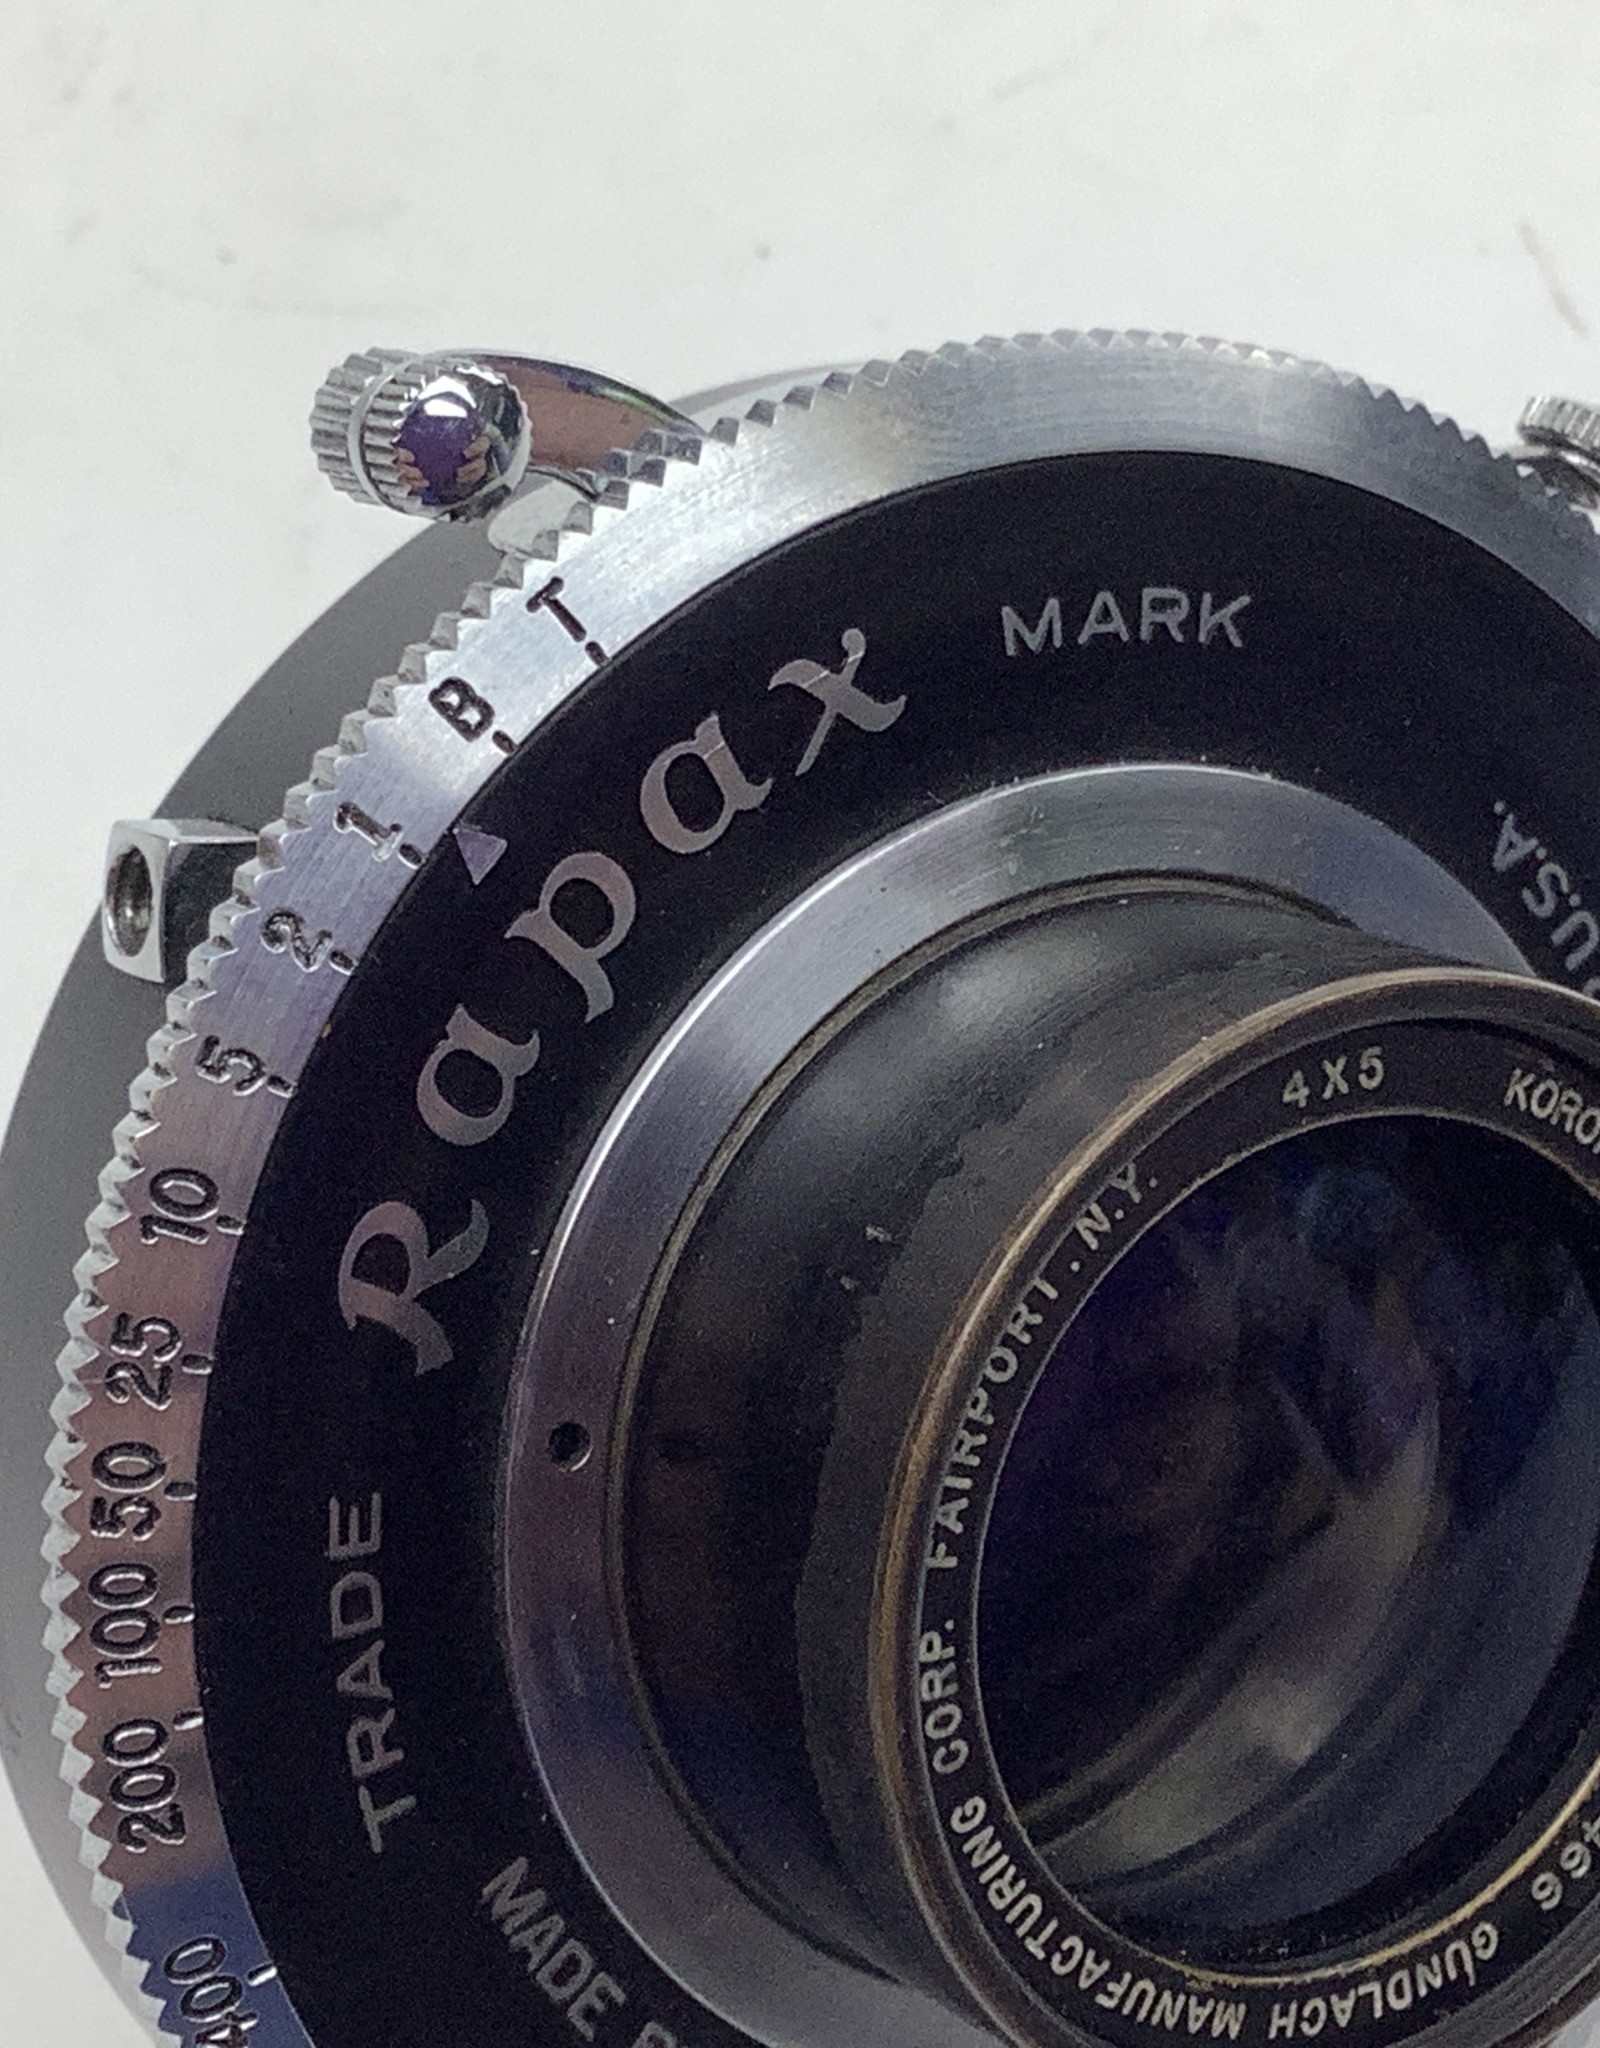 Gundlach 8 Inch f6.3 Lens in Rapax Shutter Used Fair